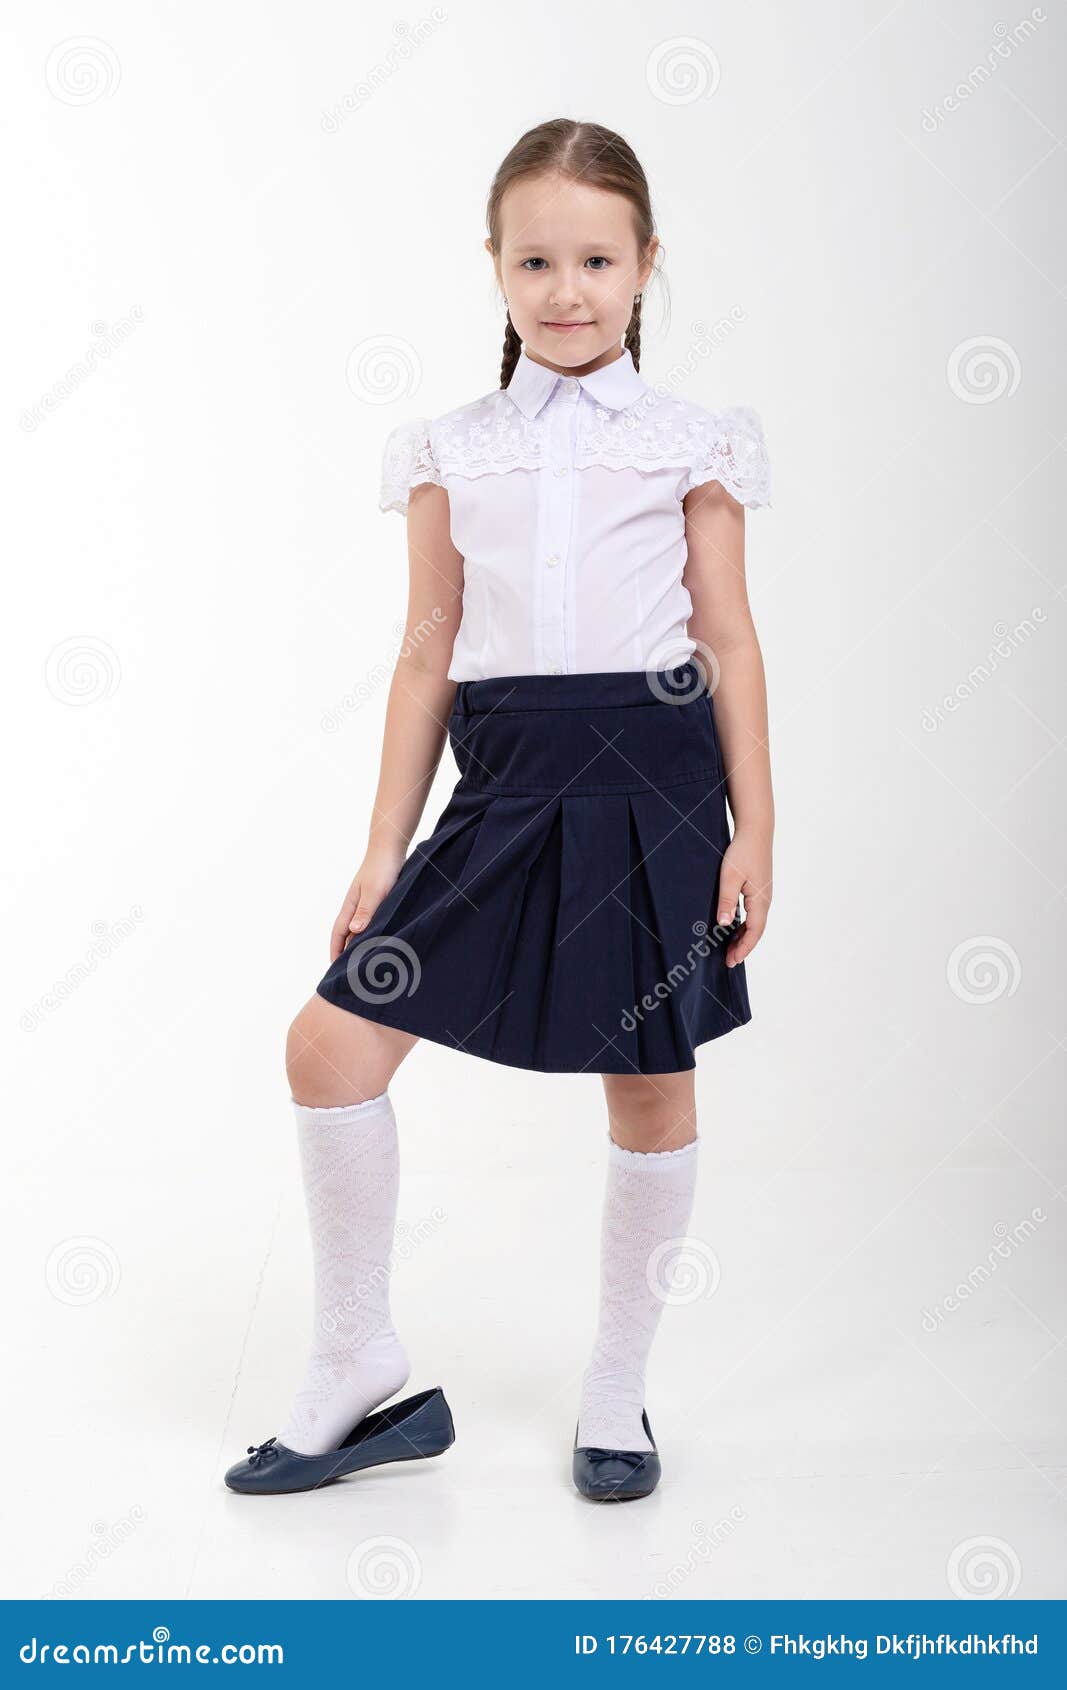 Young School-Girl